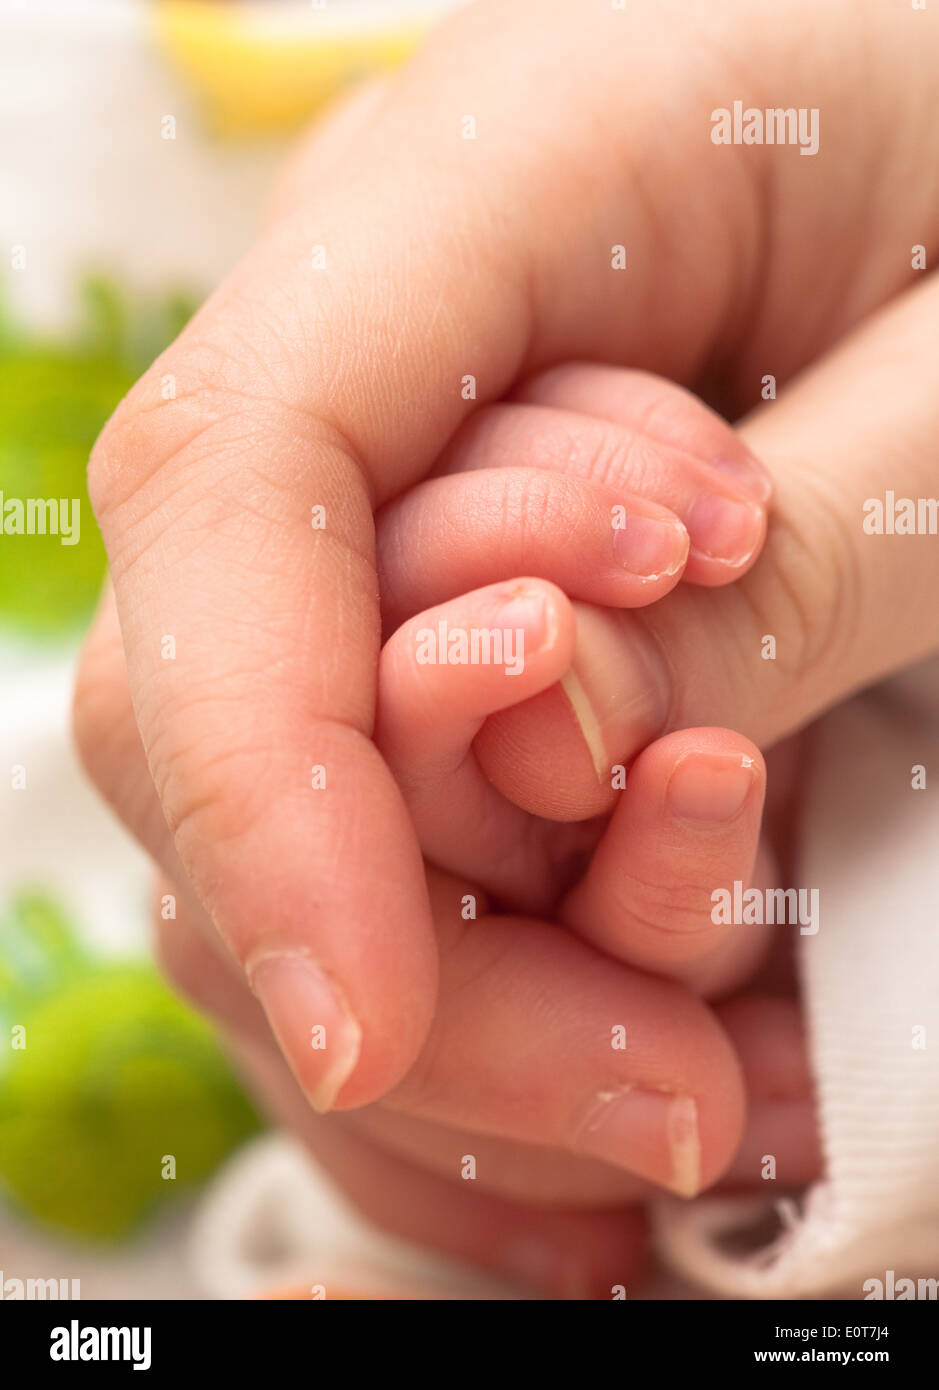 Babyhand umfasst Daumen - baby holding mother's finger Stock Photo